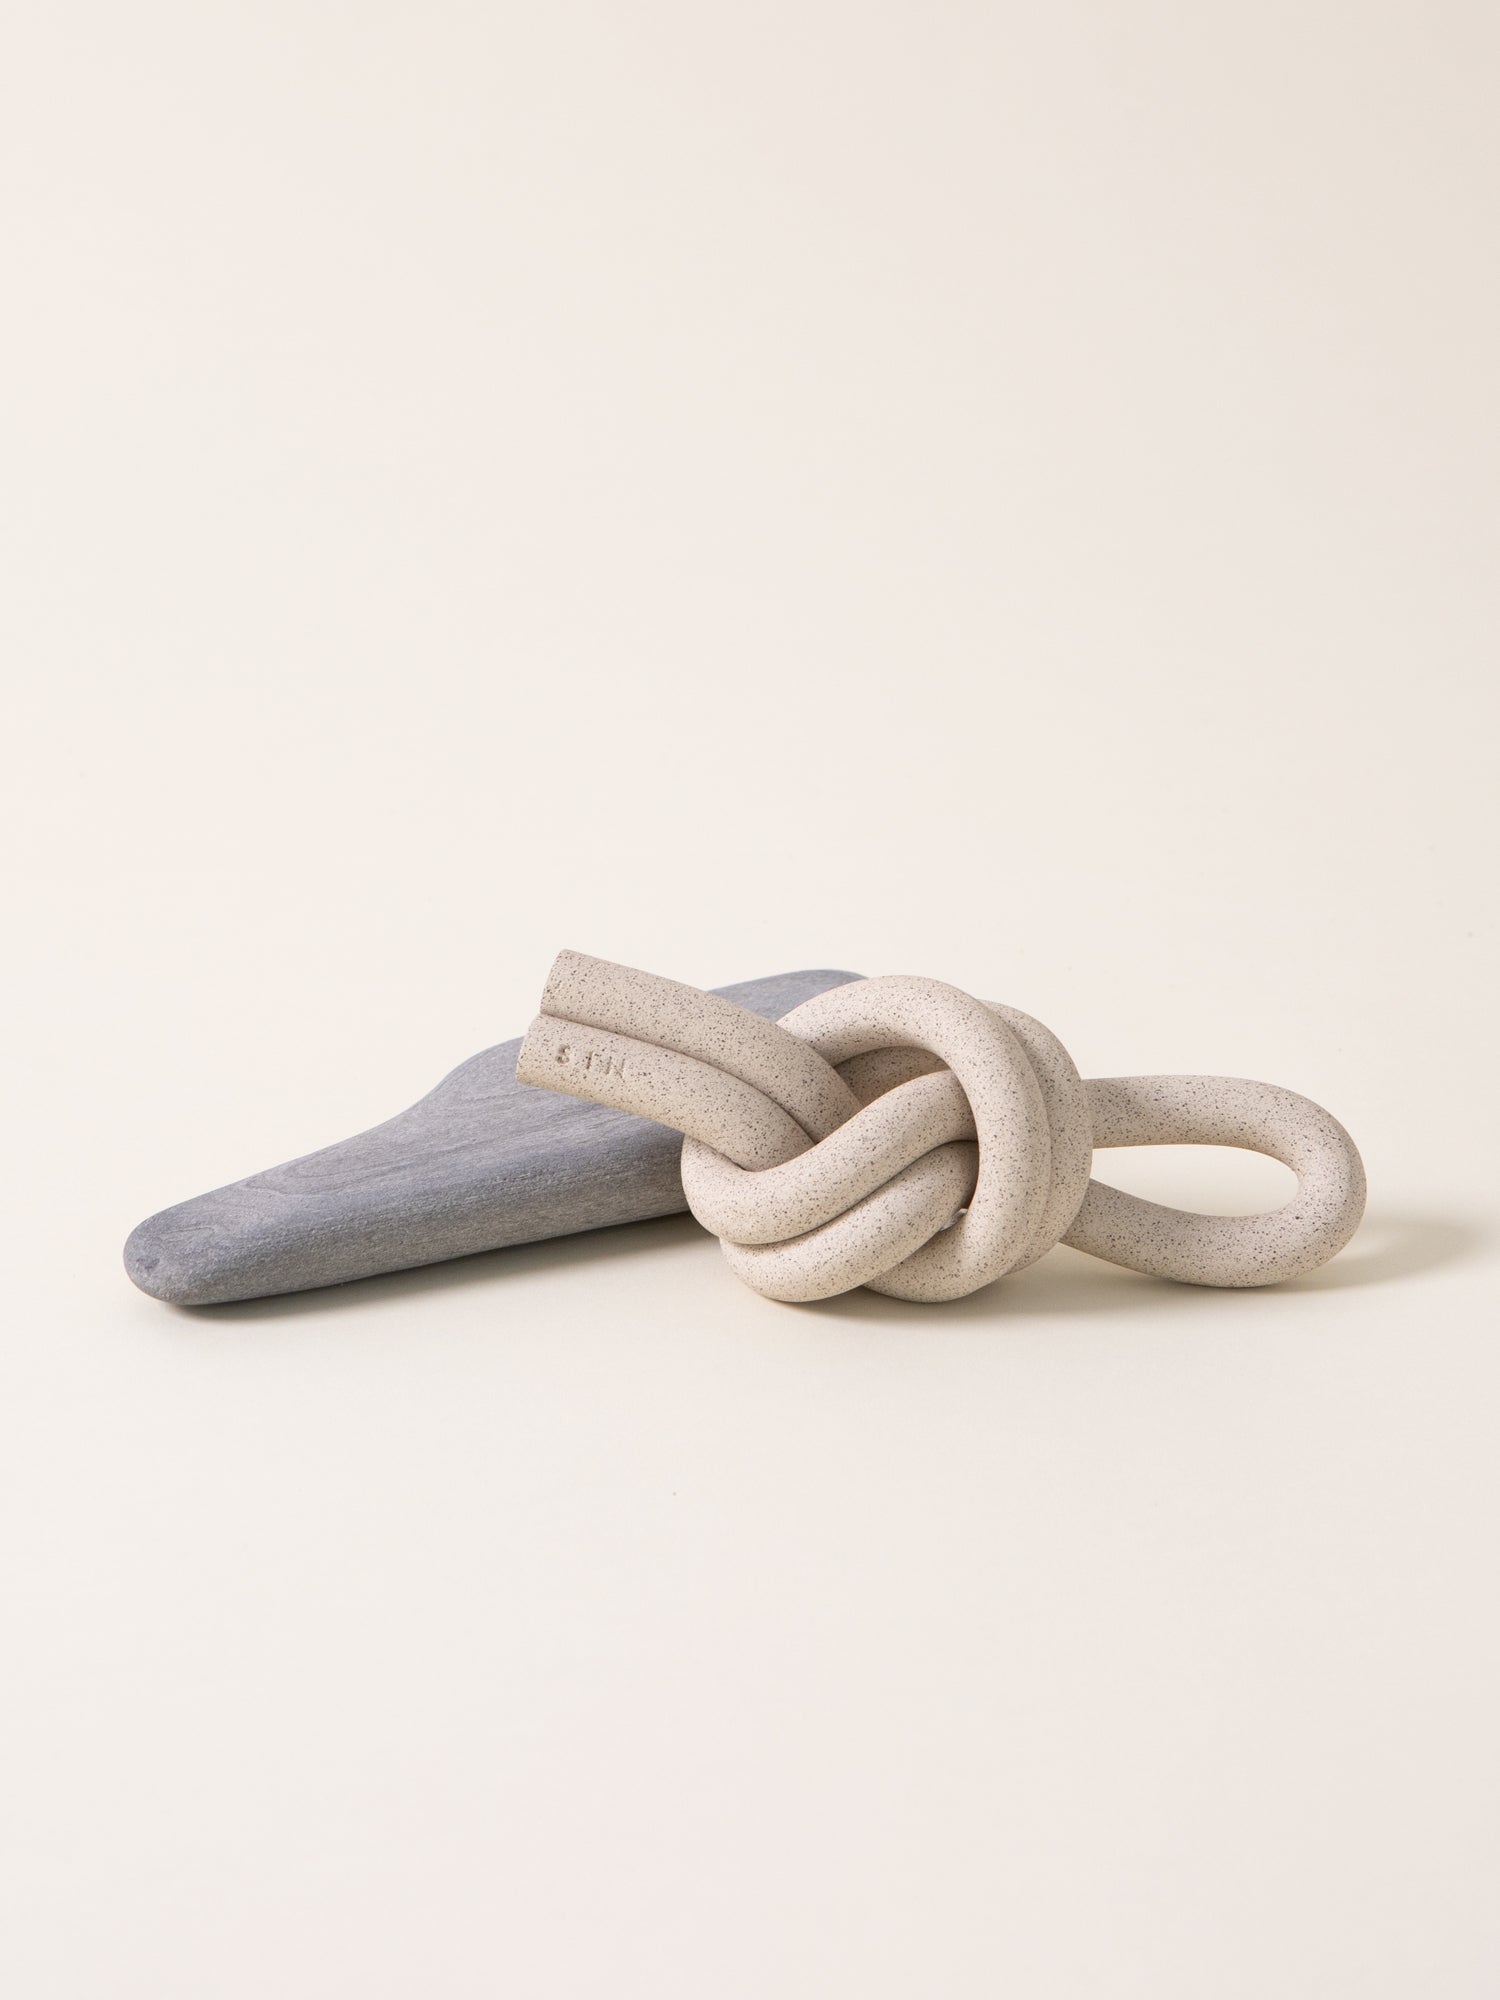 Overhand Knot, Sand: SIN ceramics & home goods - Handmade in